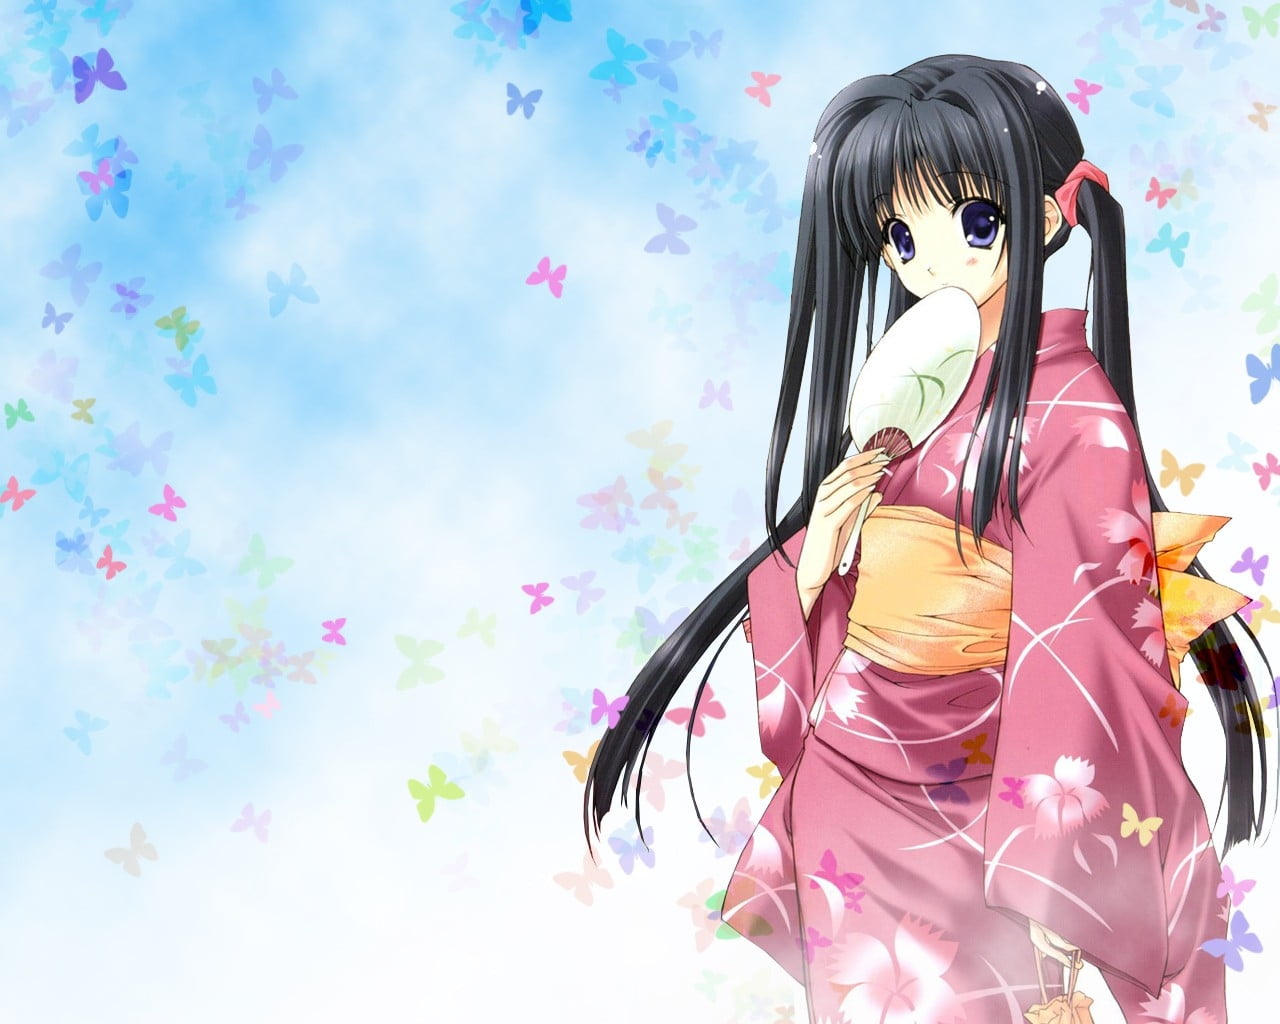 black haired female anime character wearing pink kimono